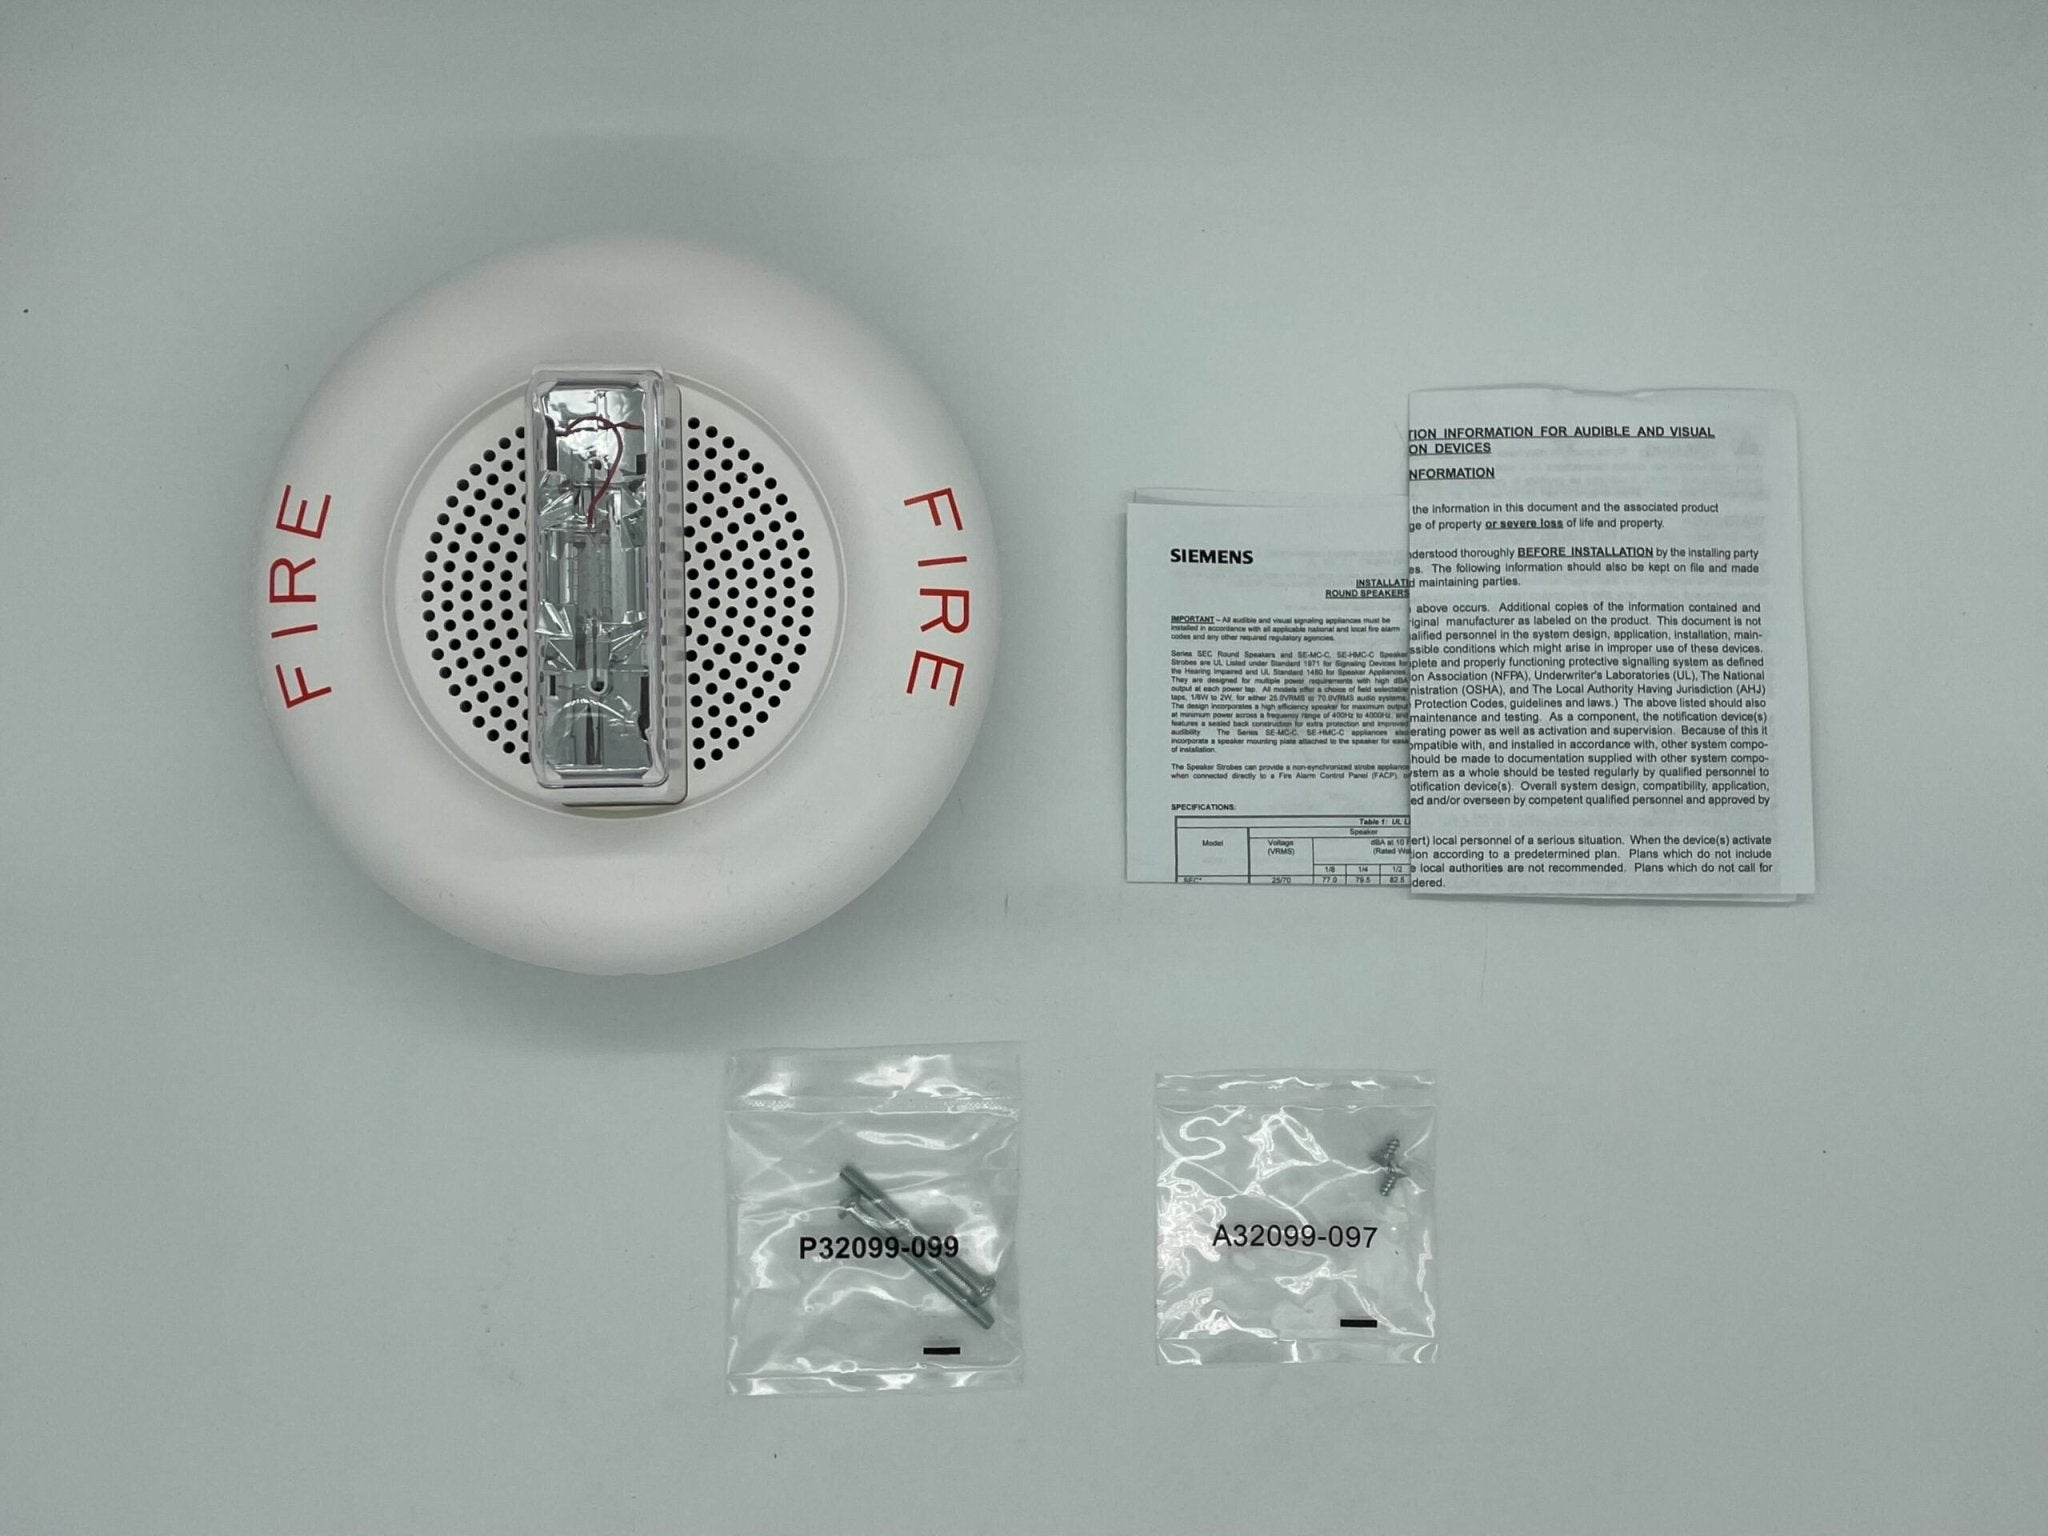 Siemens SE-MC-CW Speaker Strobe - The Fire Alarm Supplier